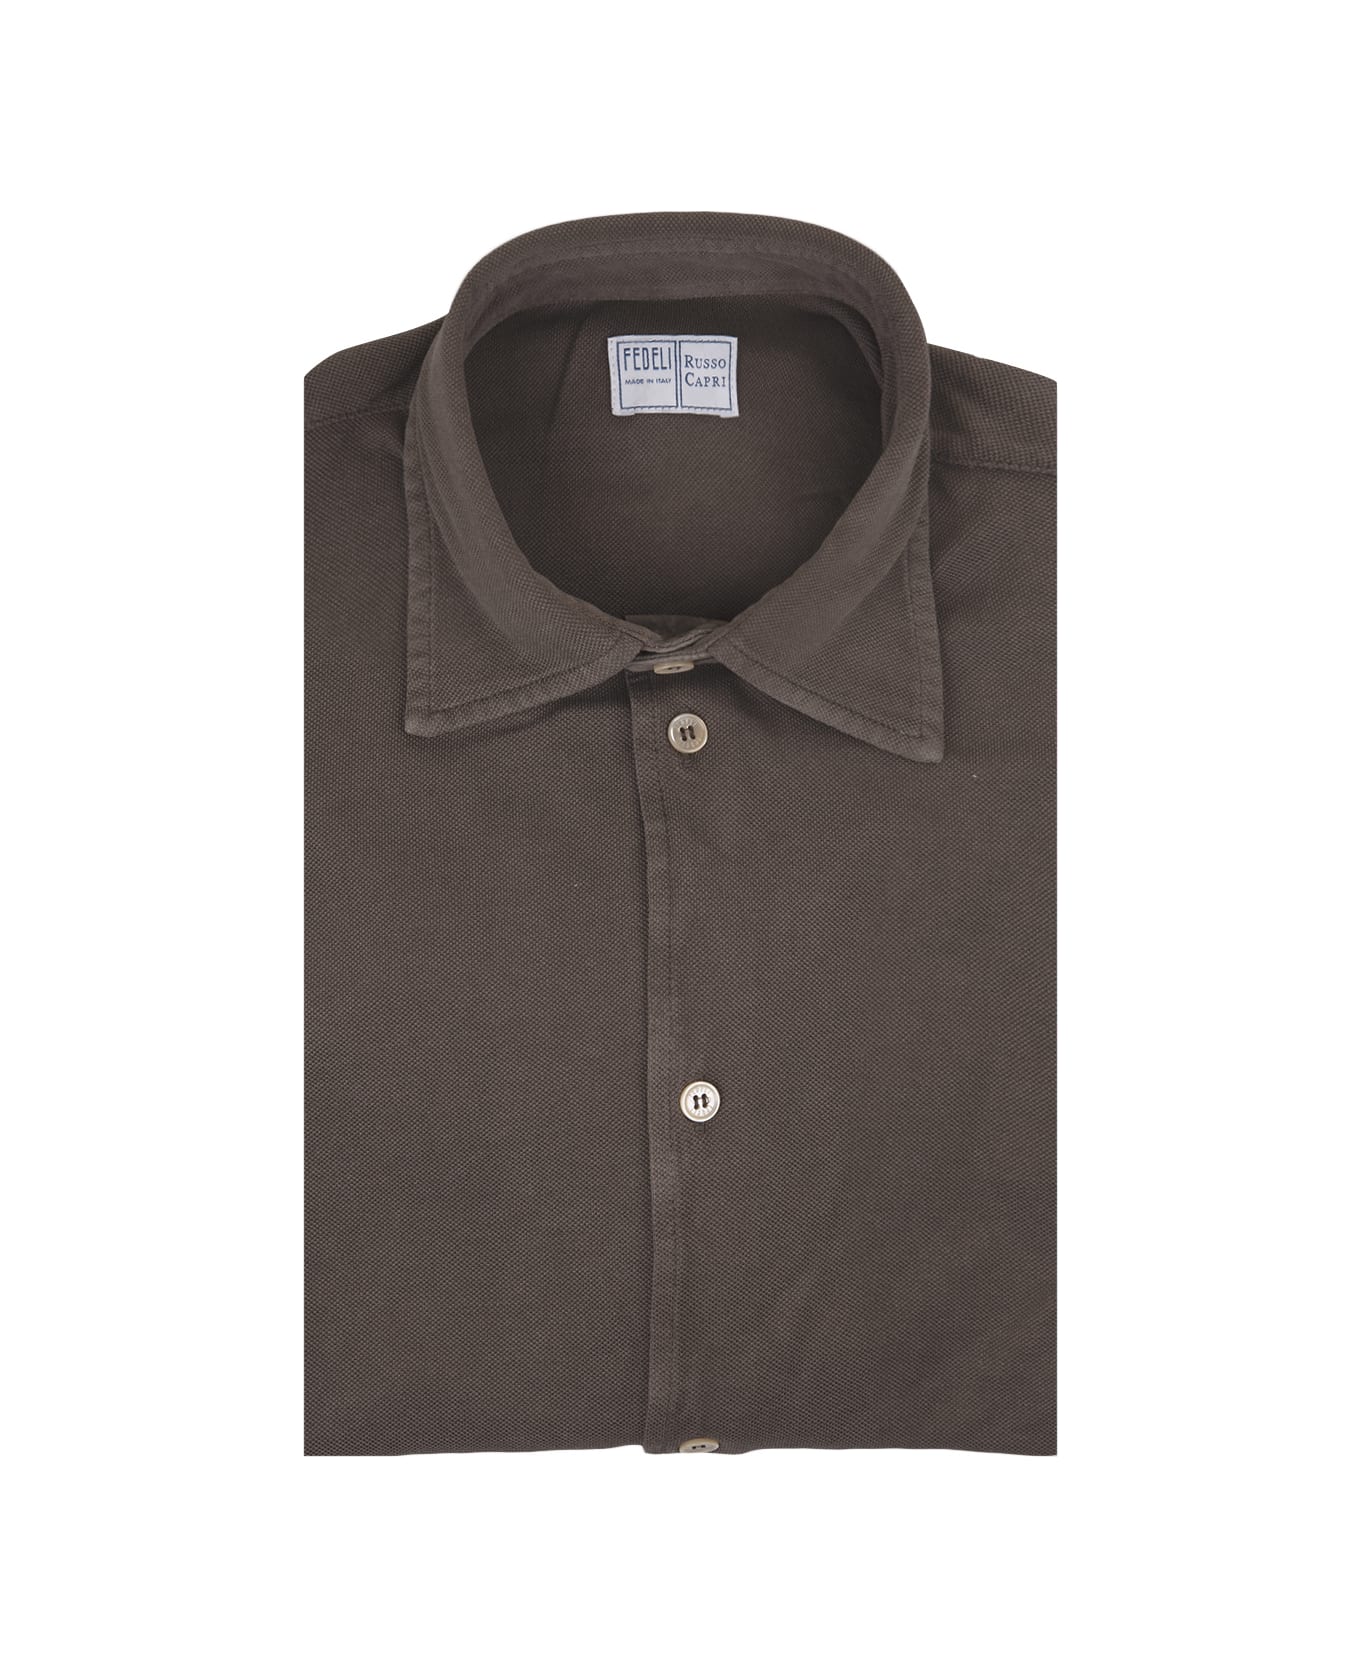 Fedeli Shirt In Brown Cotton Piqué - Brown シャツ